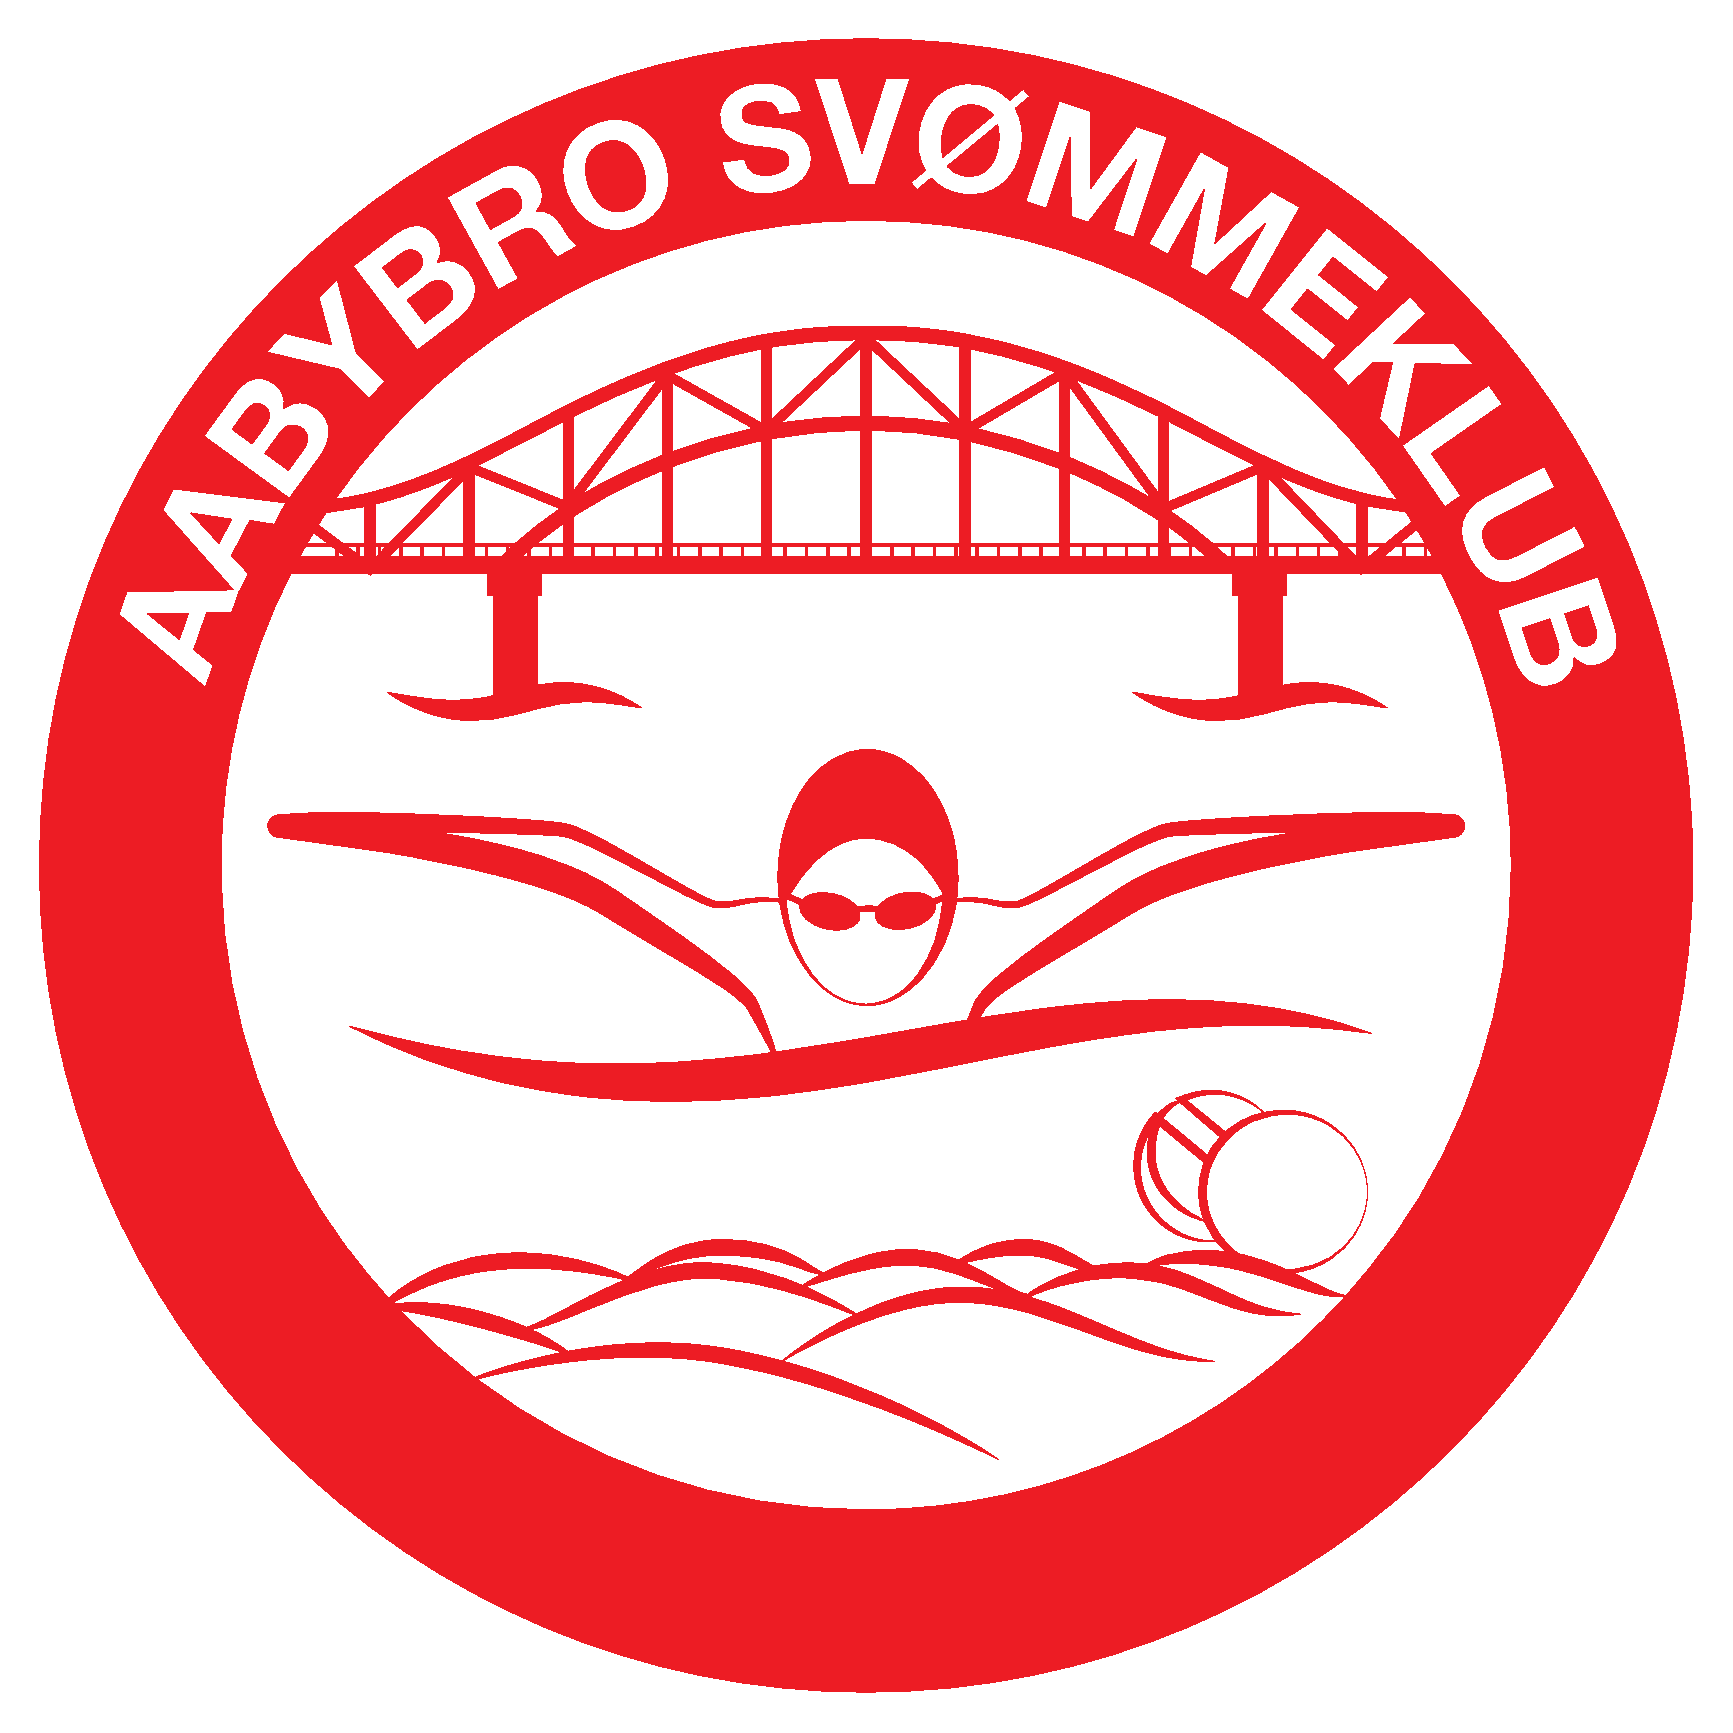 Aabybro Svømmeklub_logo_Rød.png